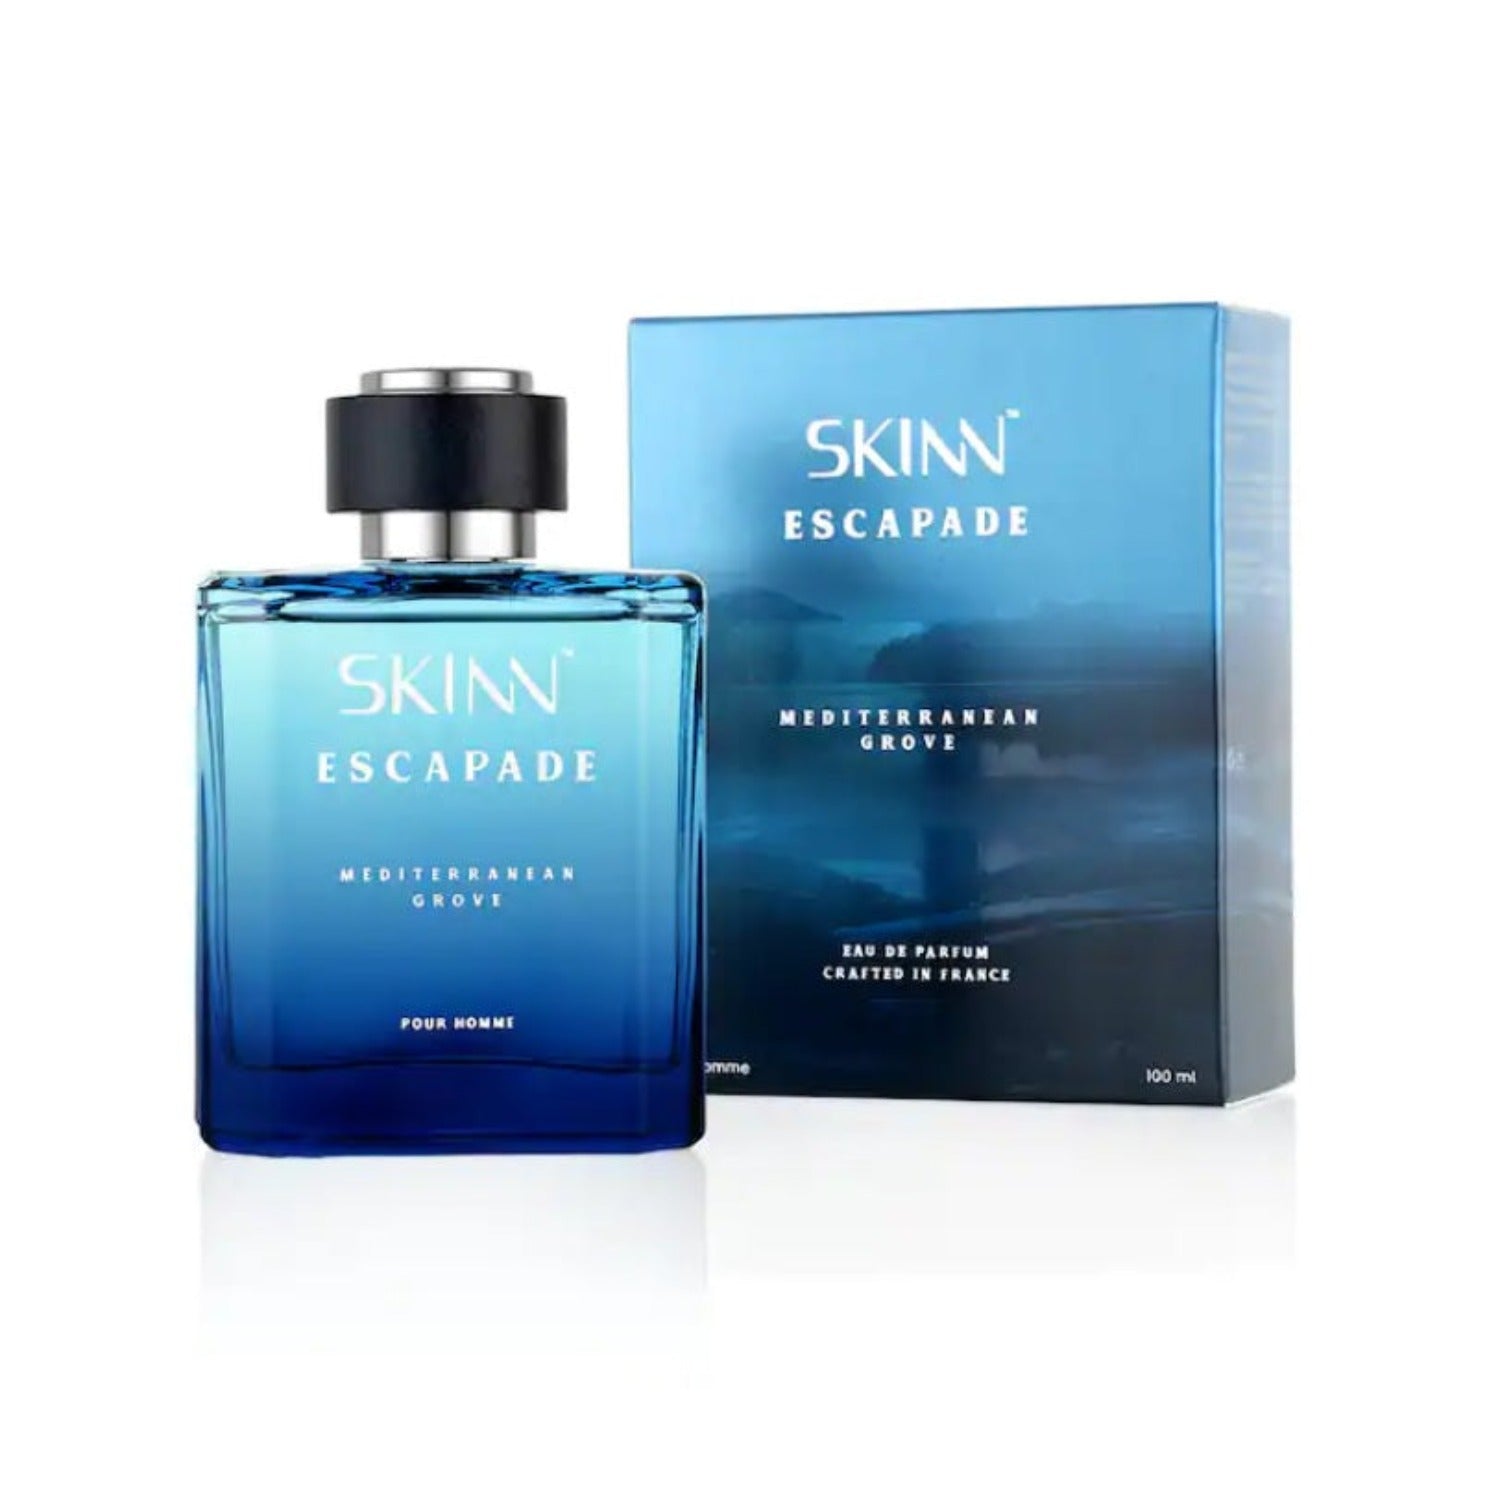 Skinn Escapade Mediterranean Grove Perfume For Men Edp Perfume Spray 100ml